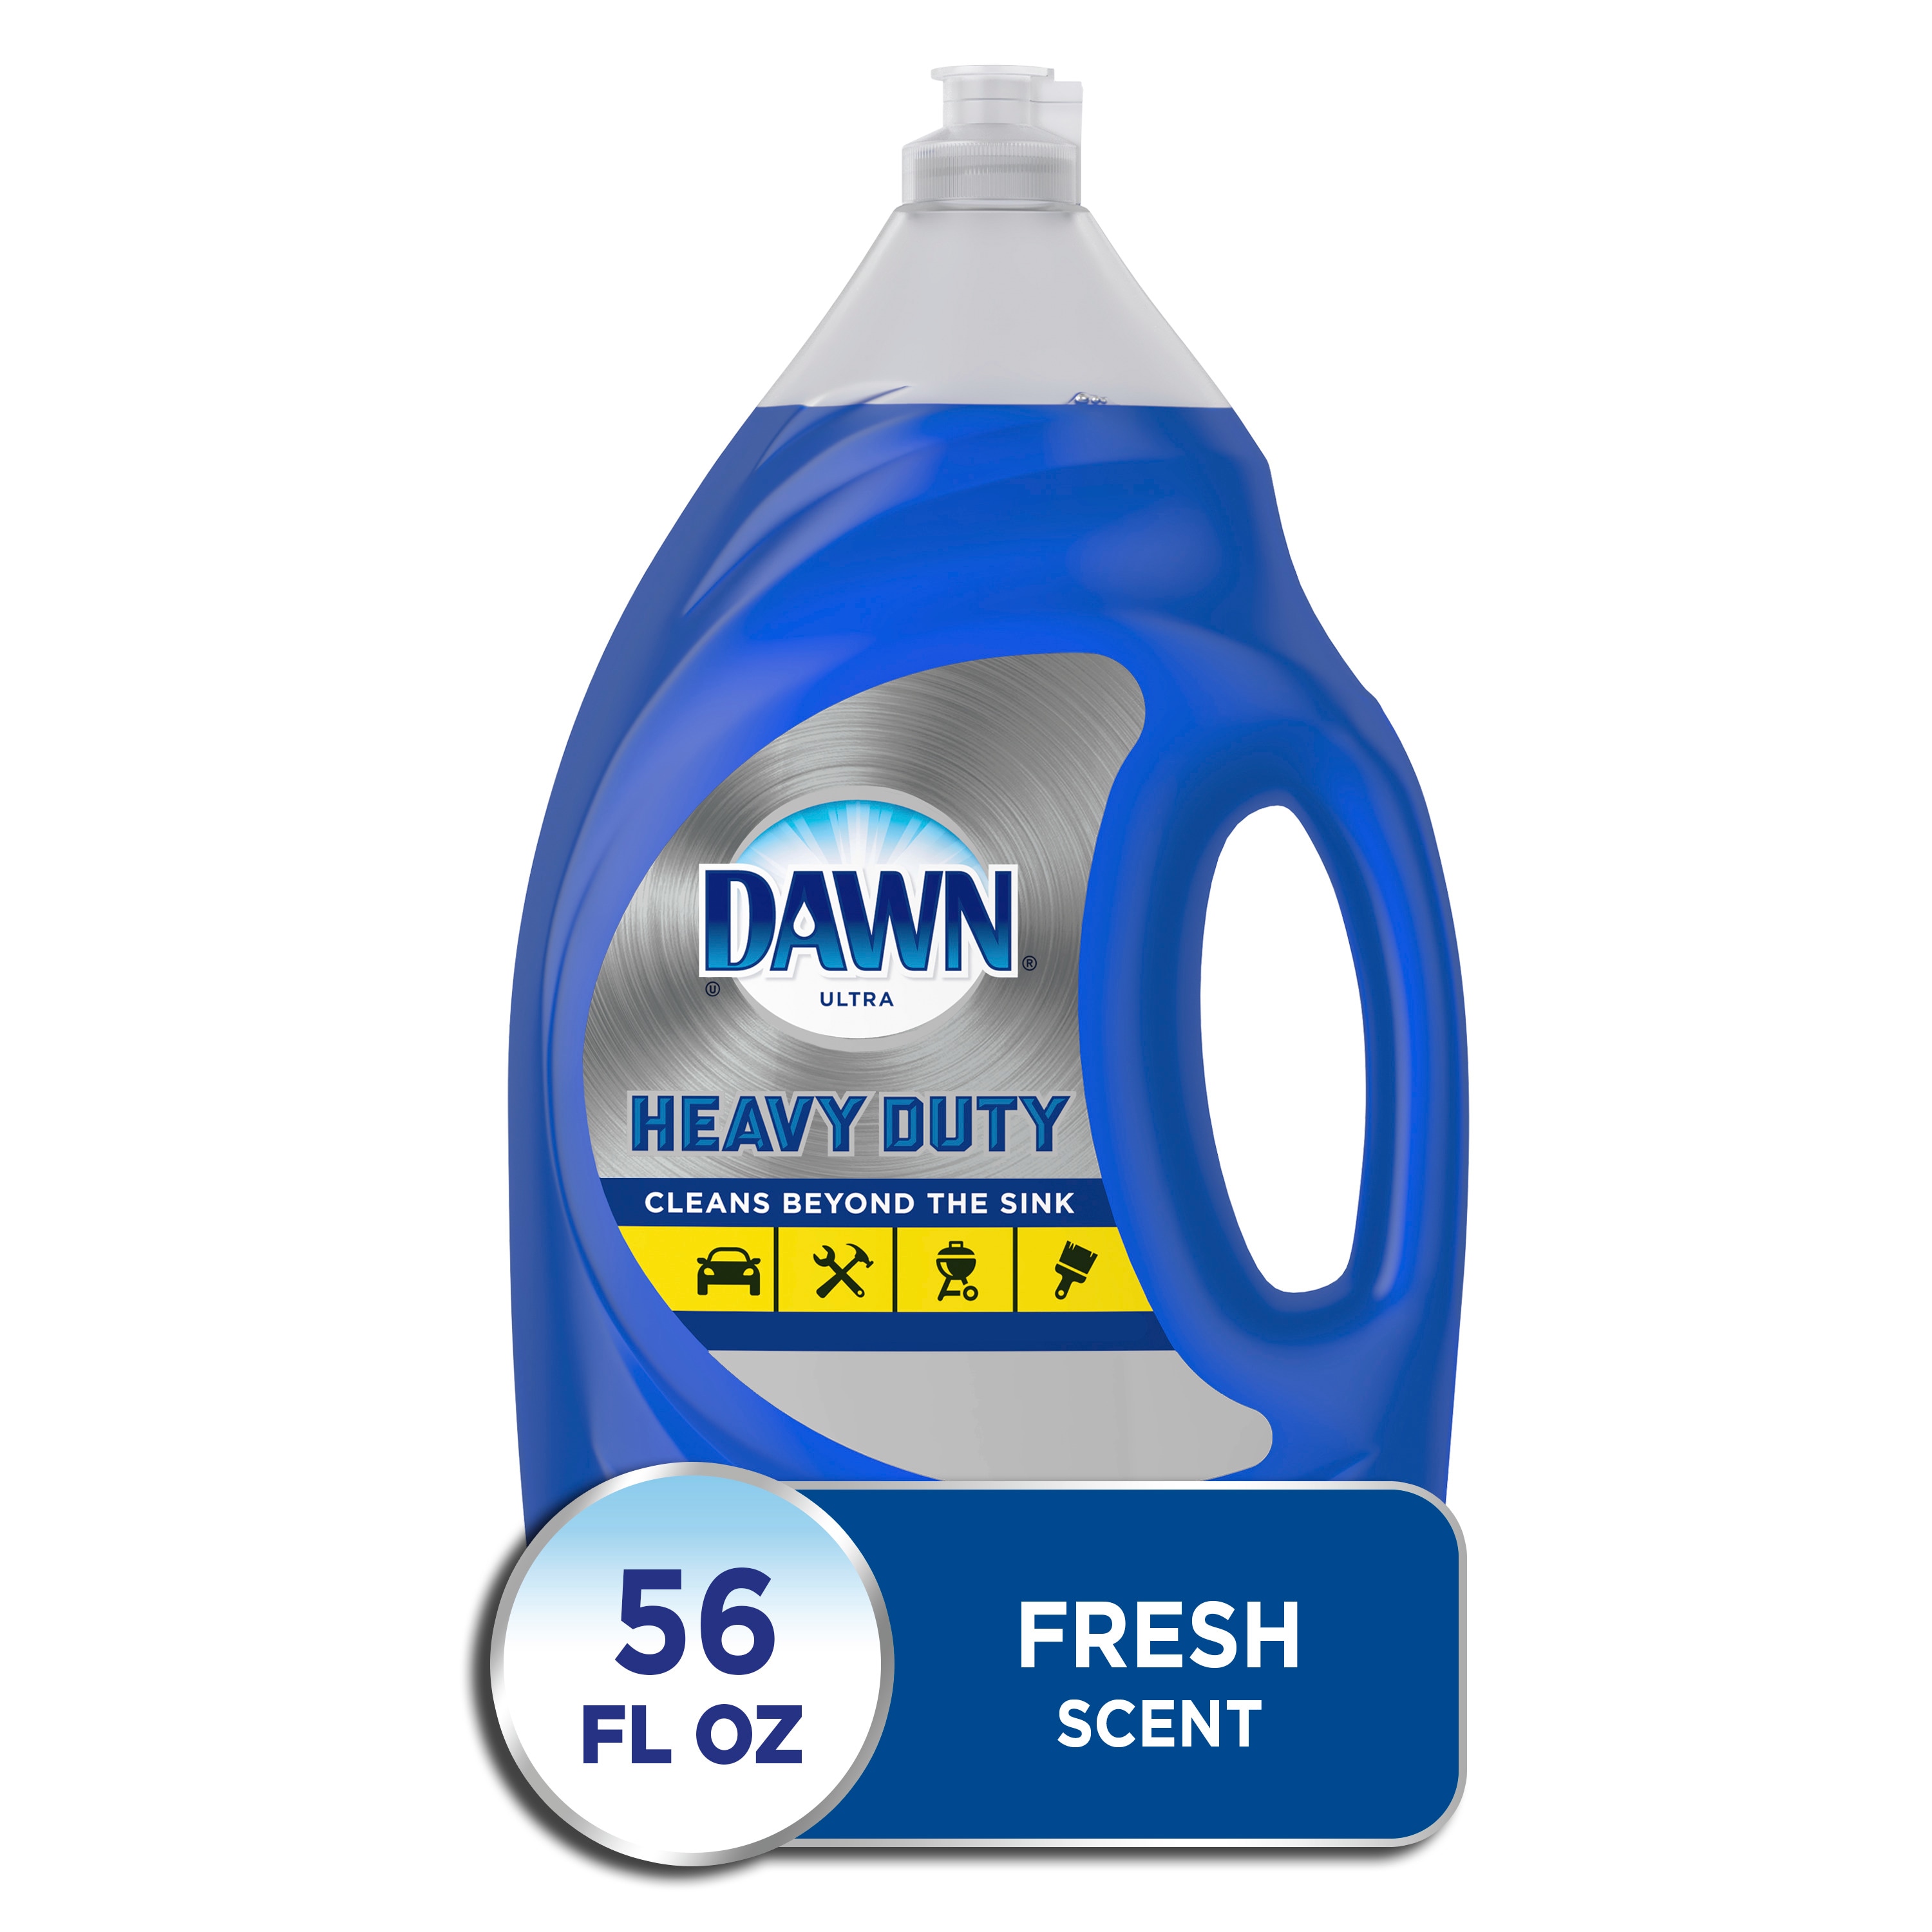 Dawn Powerwash Dish Soap Review 2021